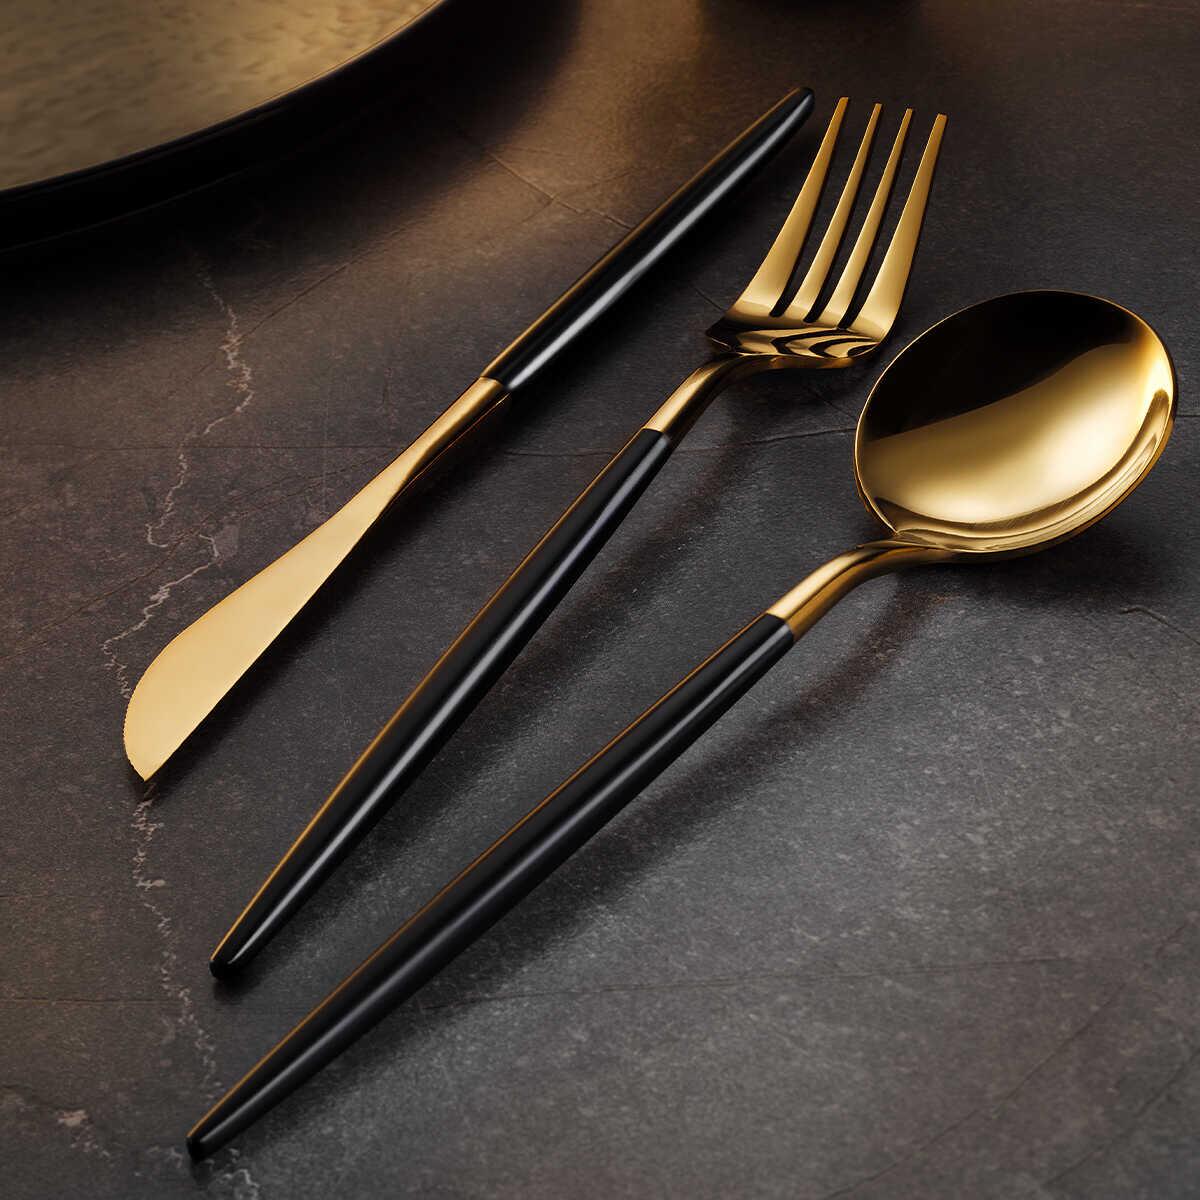 Aryıldız Versay Black Gold 36 Piece Cutlery Set for 6 Persons